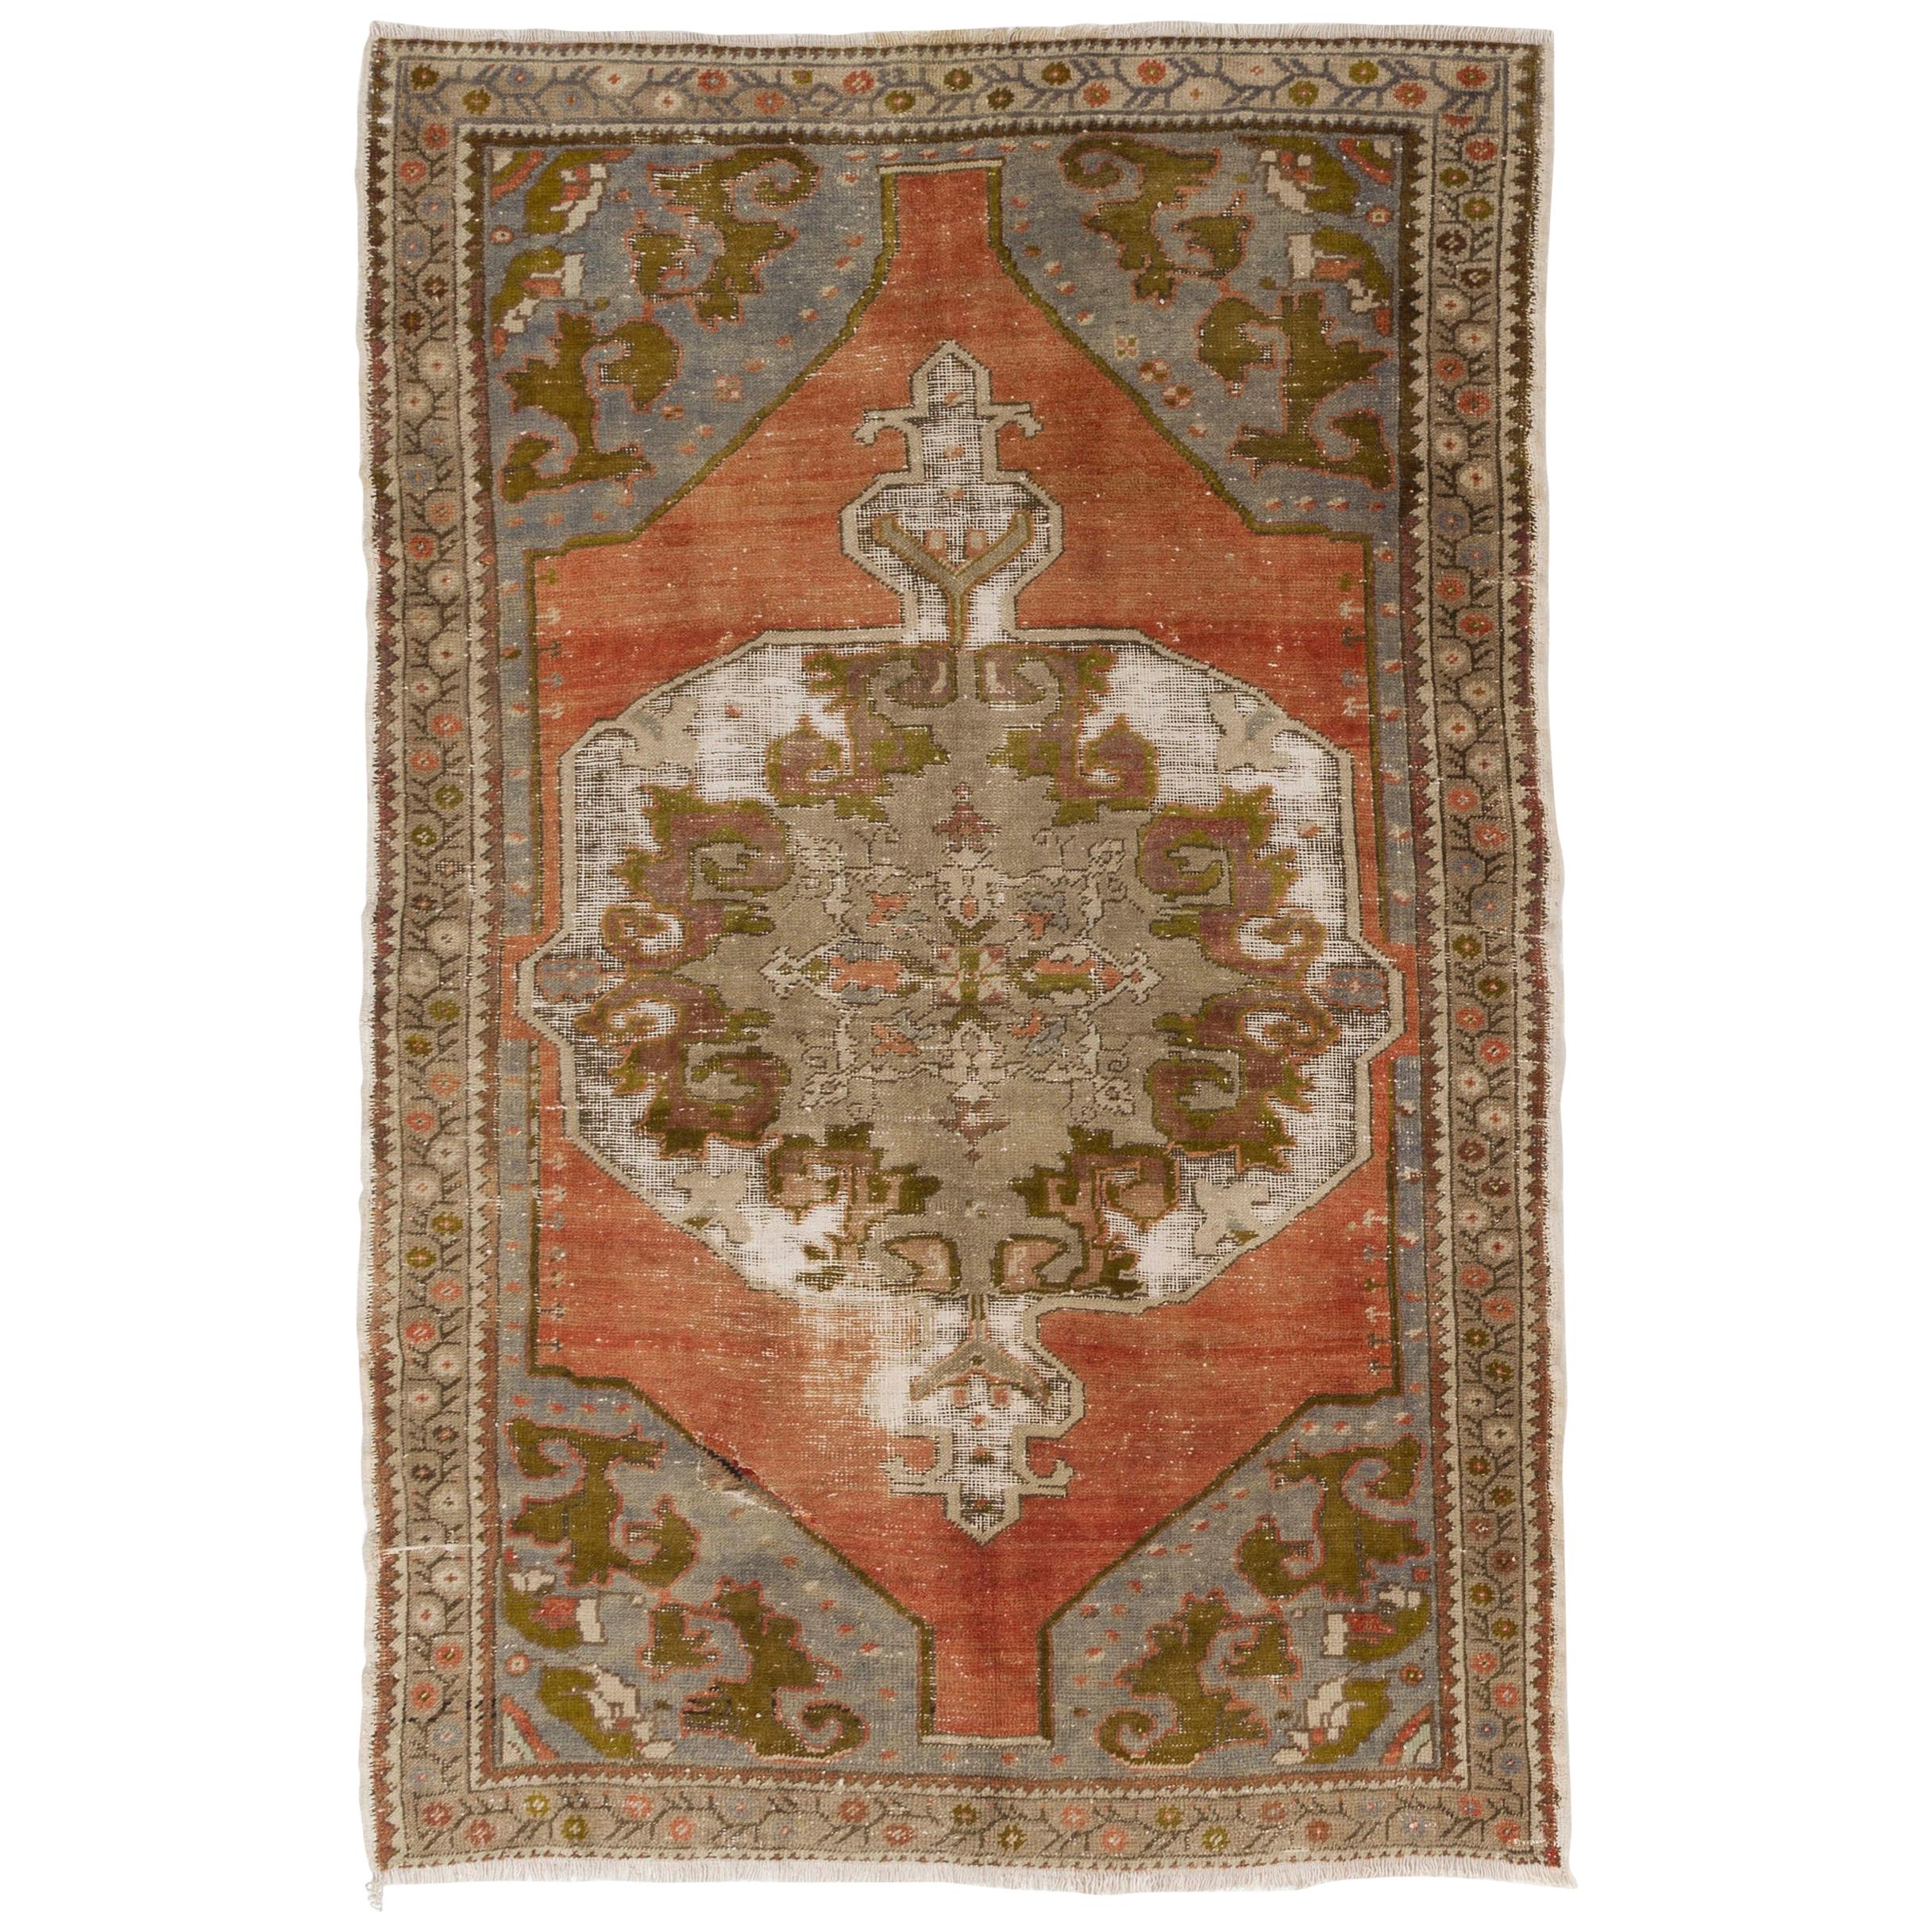 Rustic Vintage Oushak Rug in Earthy Colors One of a Kind Wool Carpet